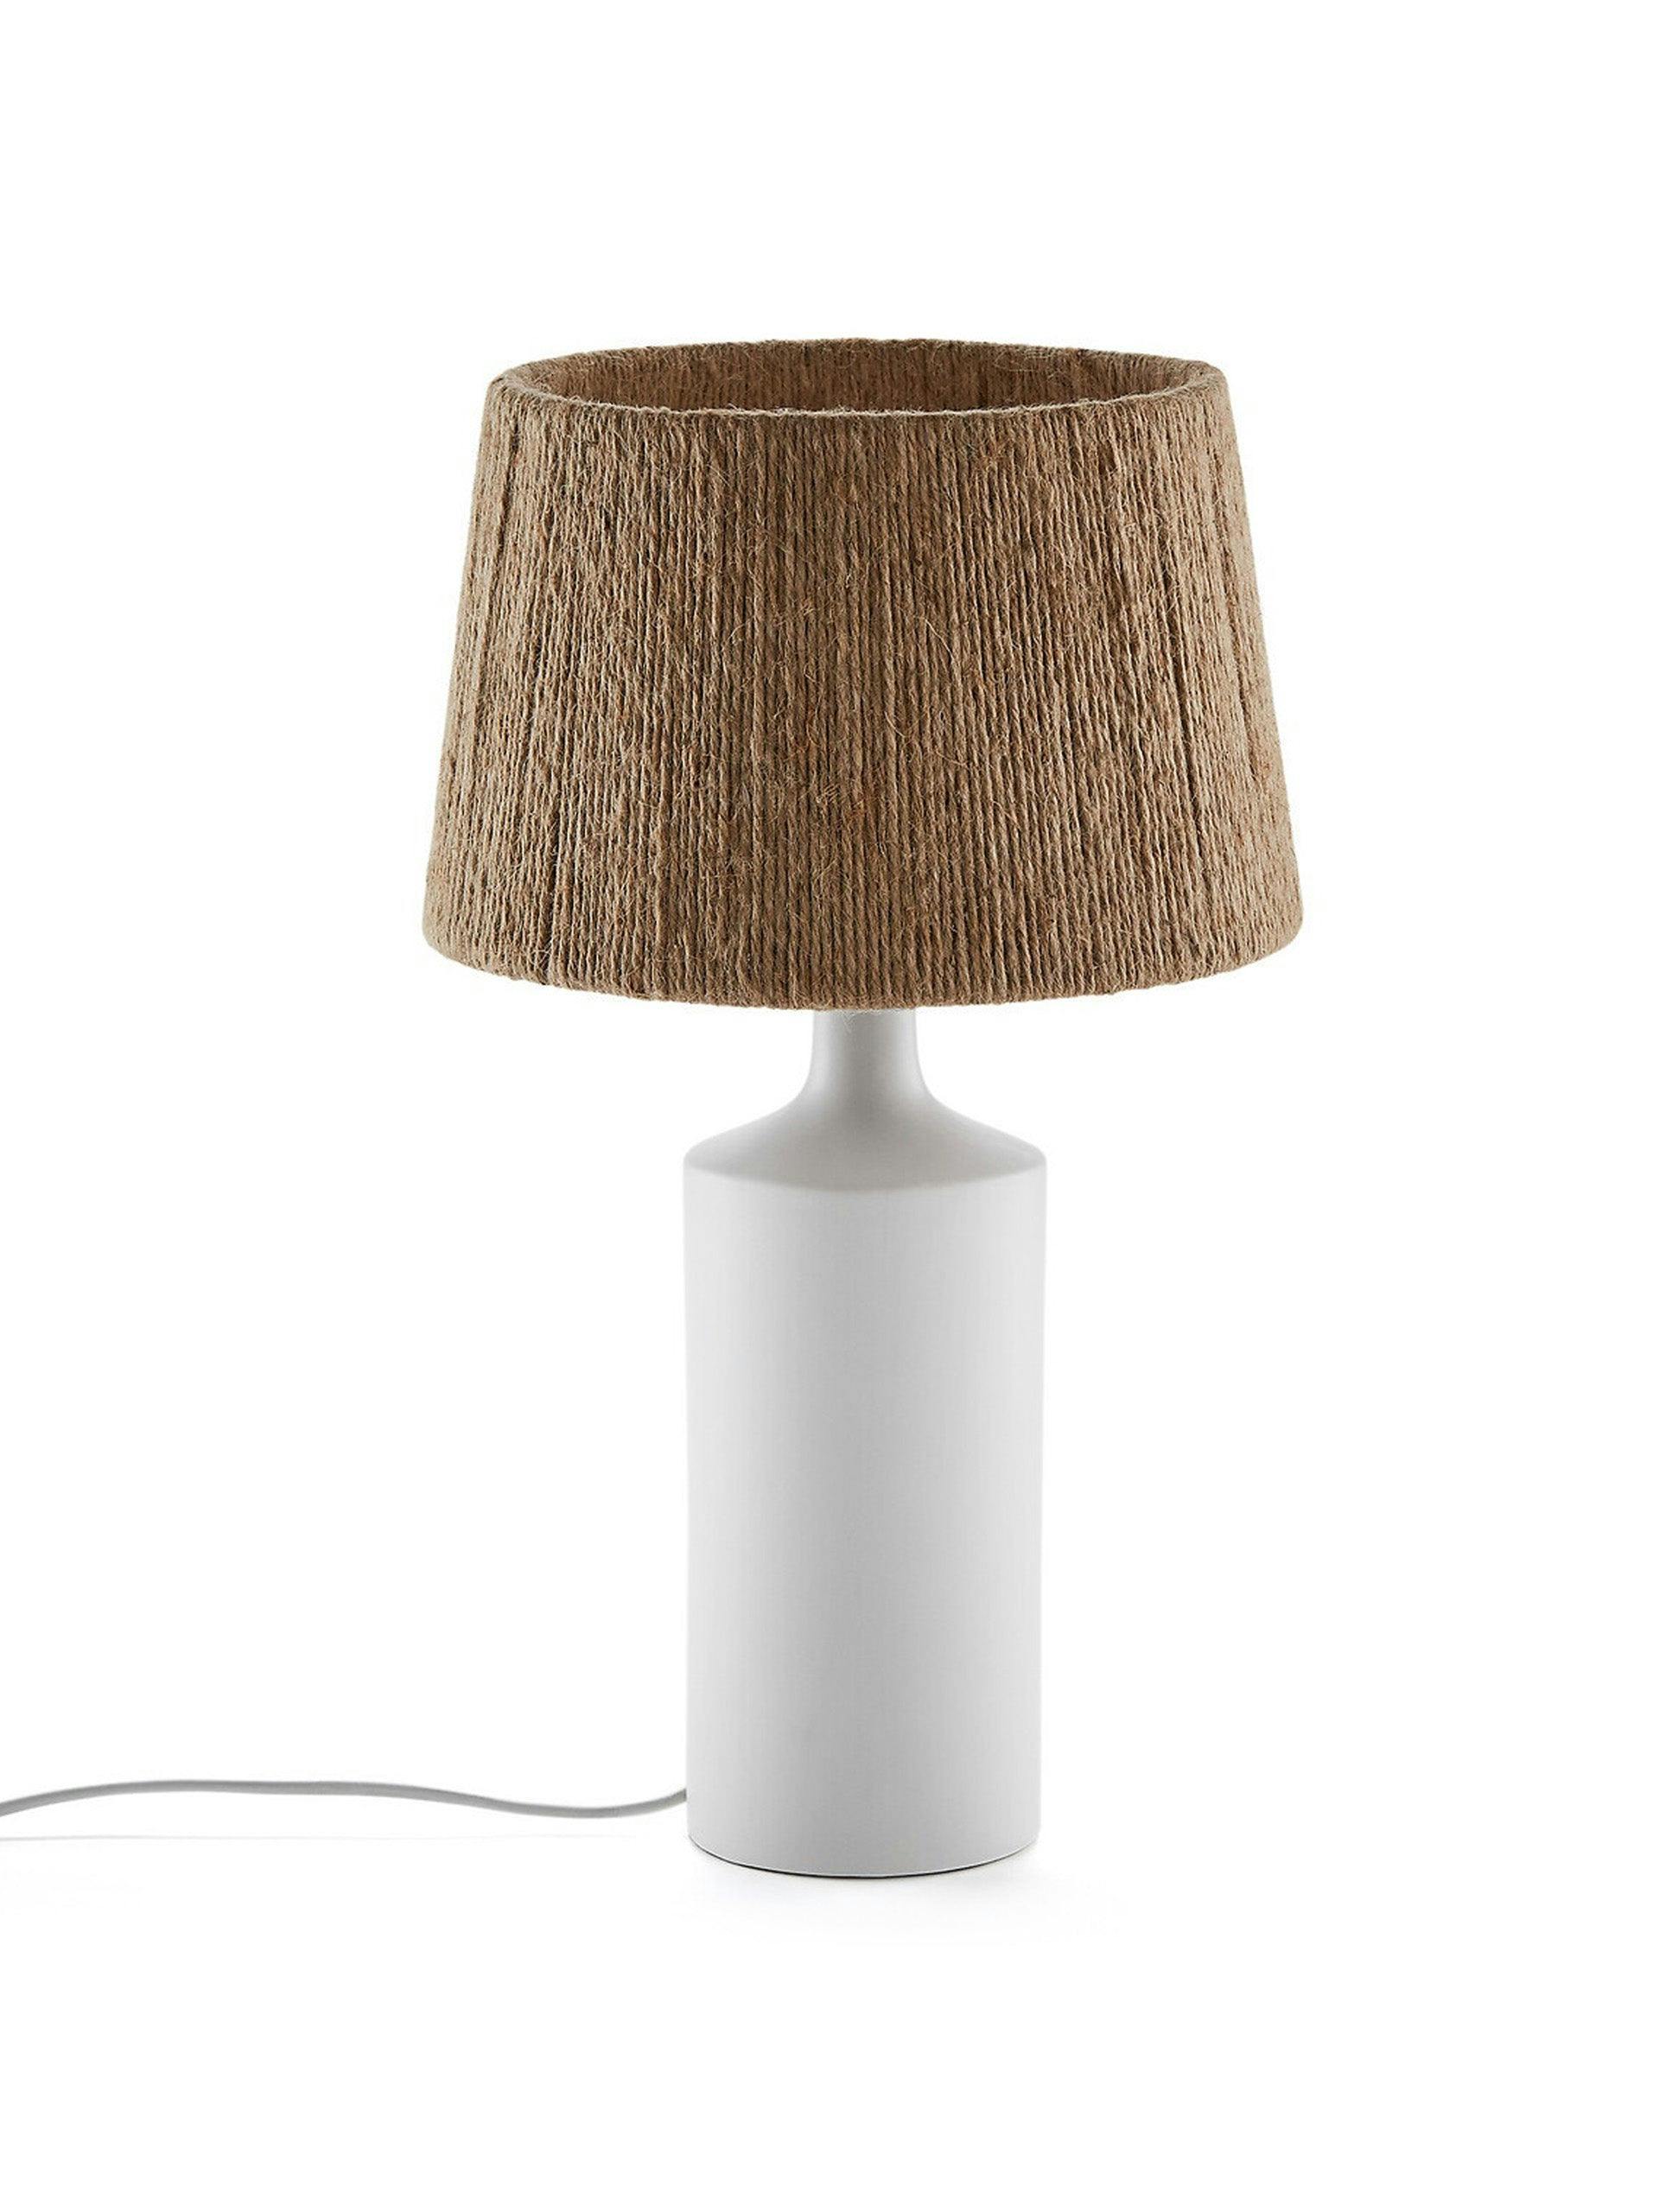 Yoru ceramic and hemp table lamp